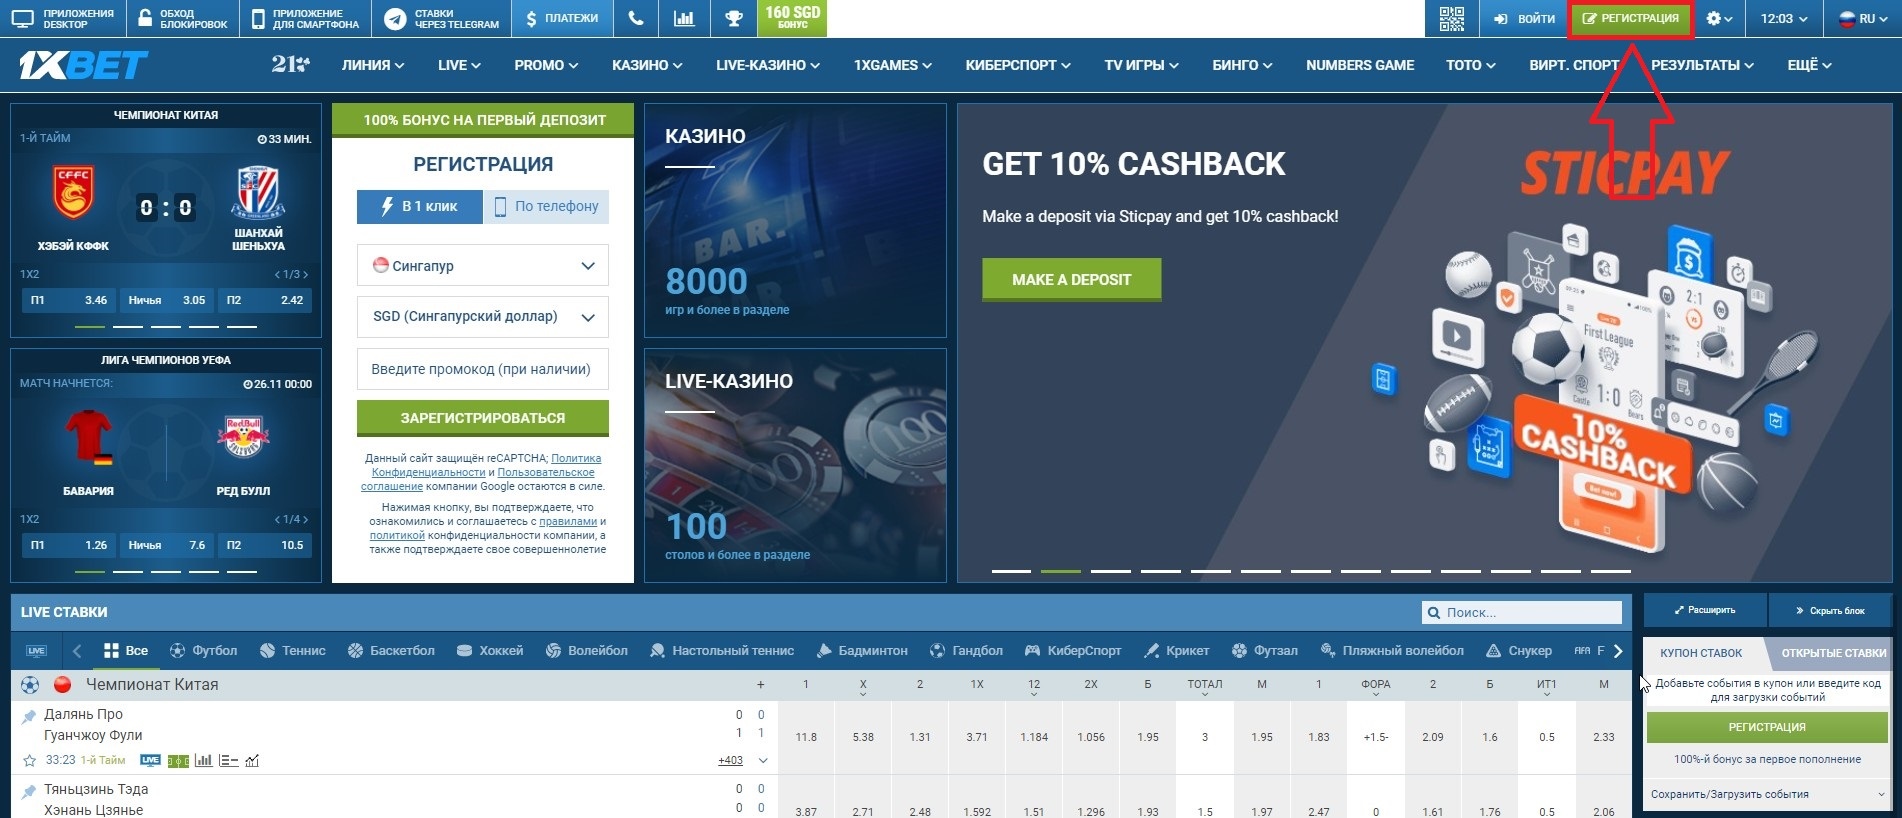 Казино 1xbet бонусы за регистрацию казино онлайн бесплатно автоматы адмиралы